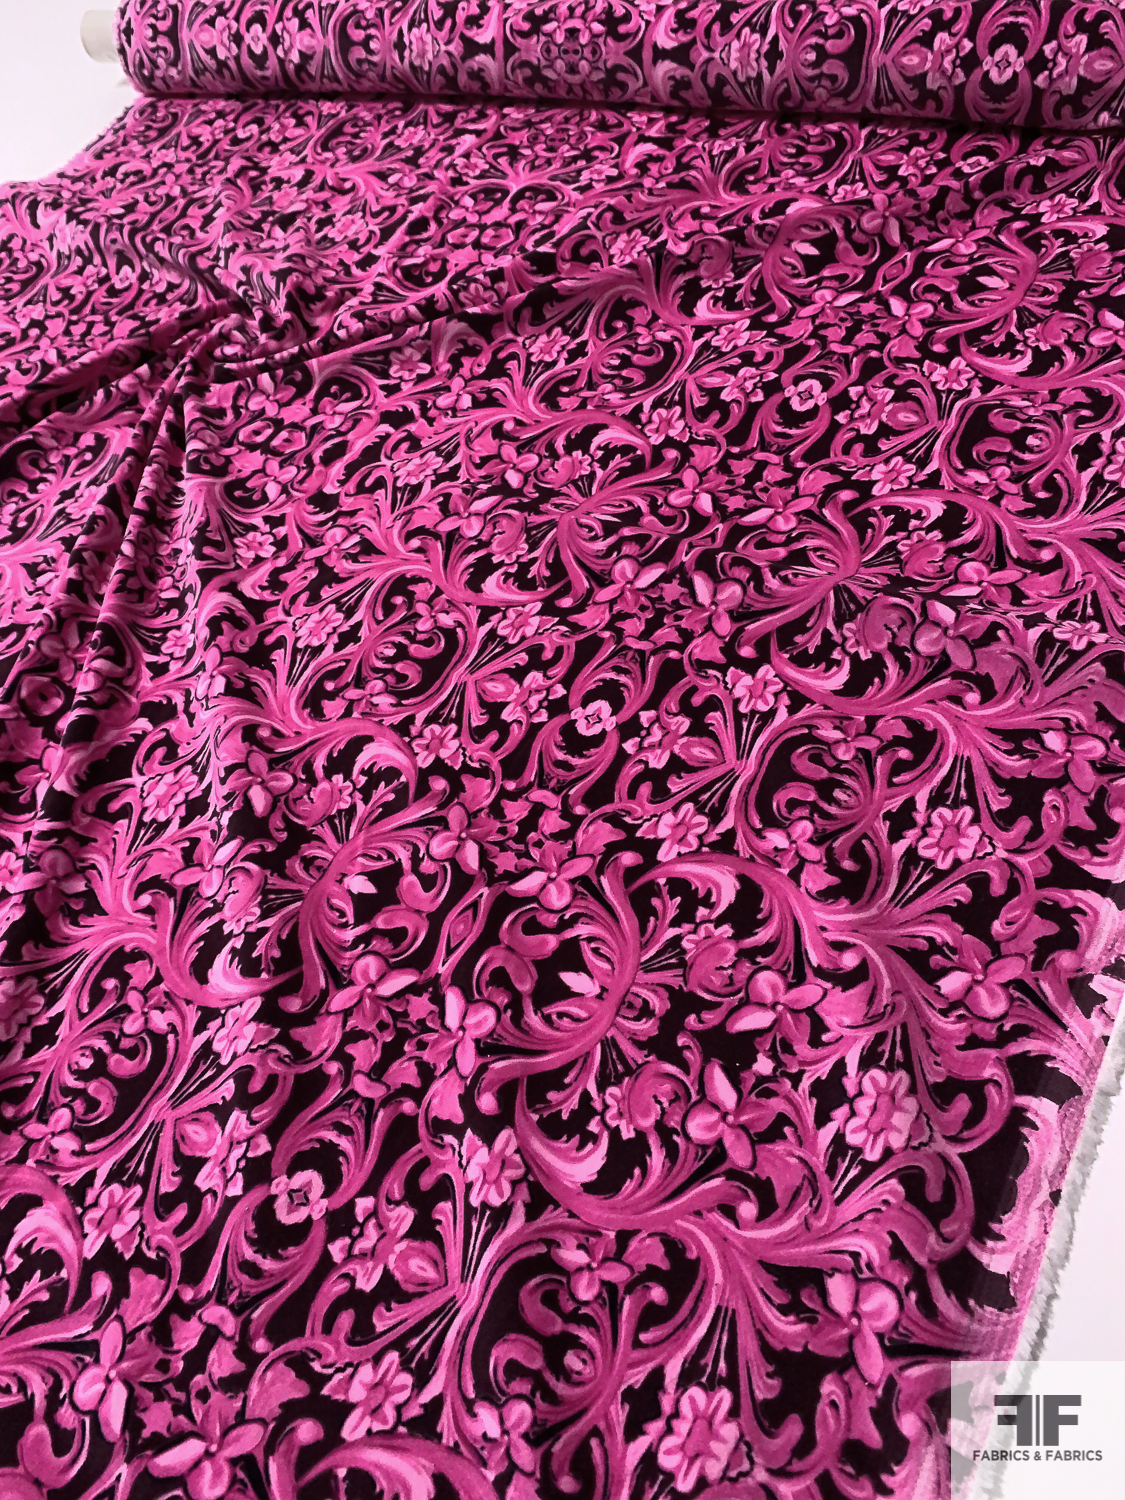 Ornate Regal Printed Stretch Cotton Velveteen - Rose Pink / Plum